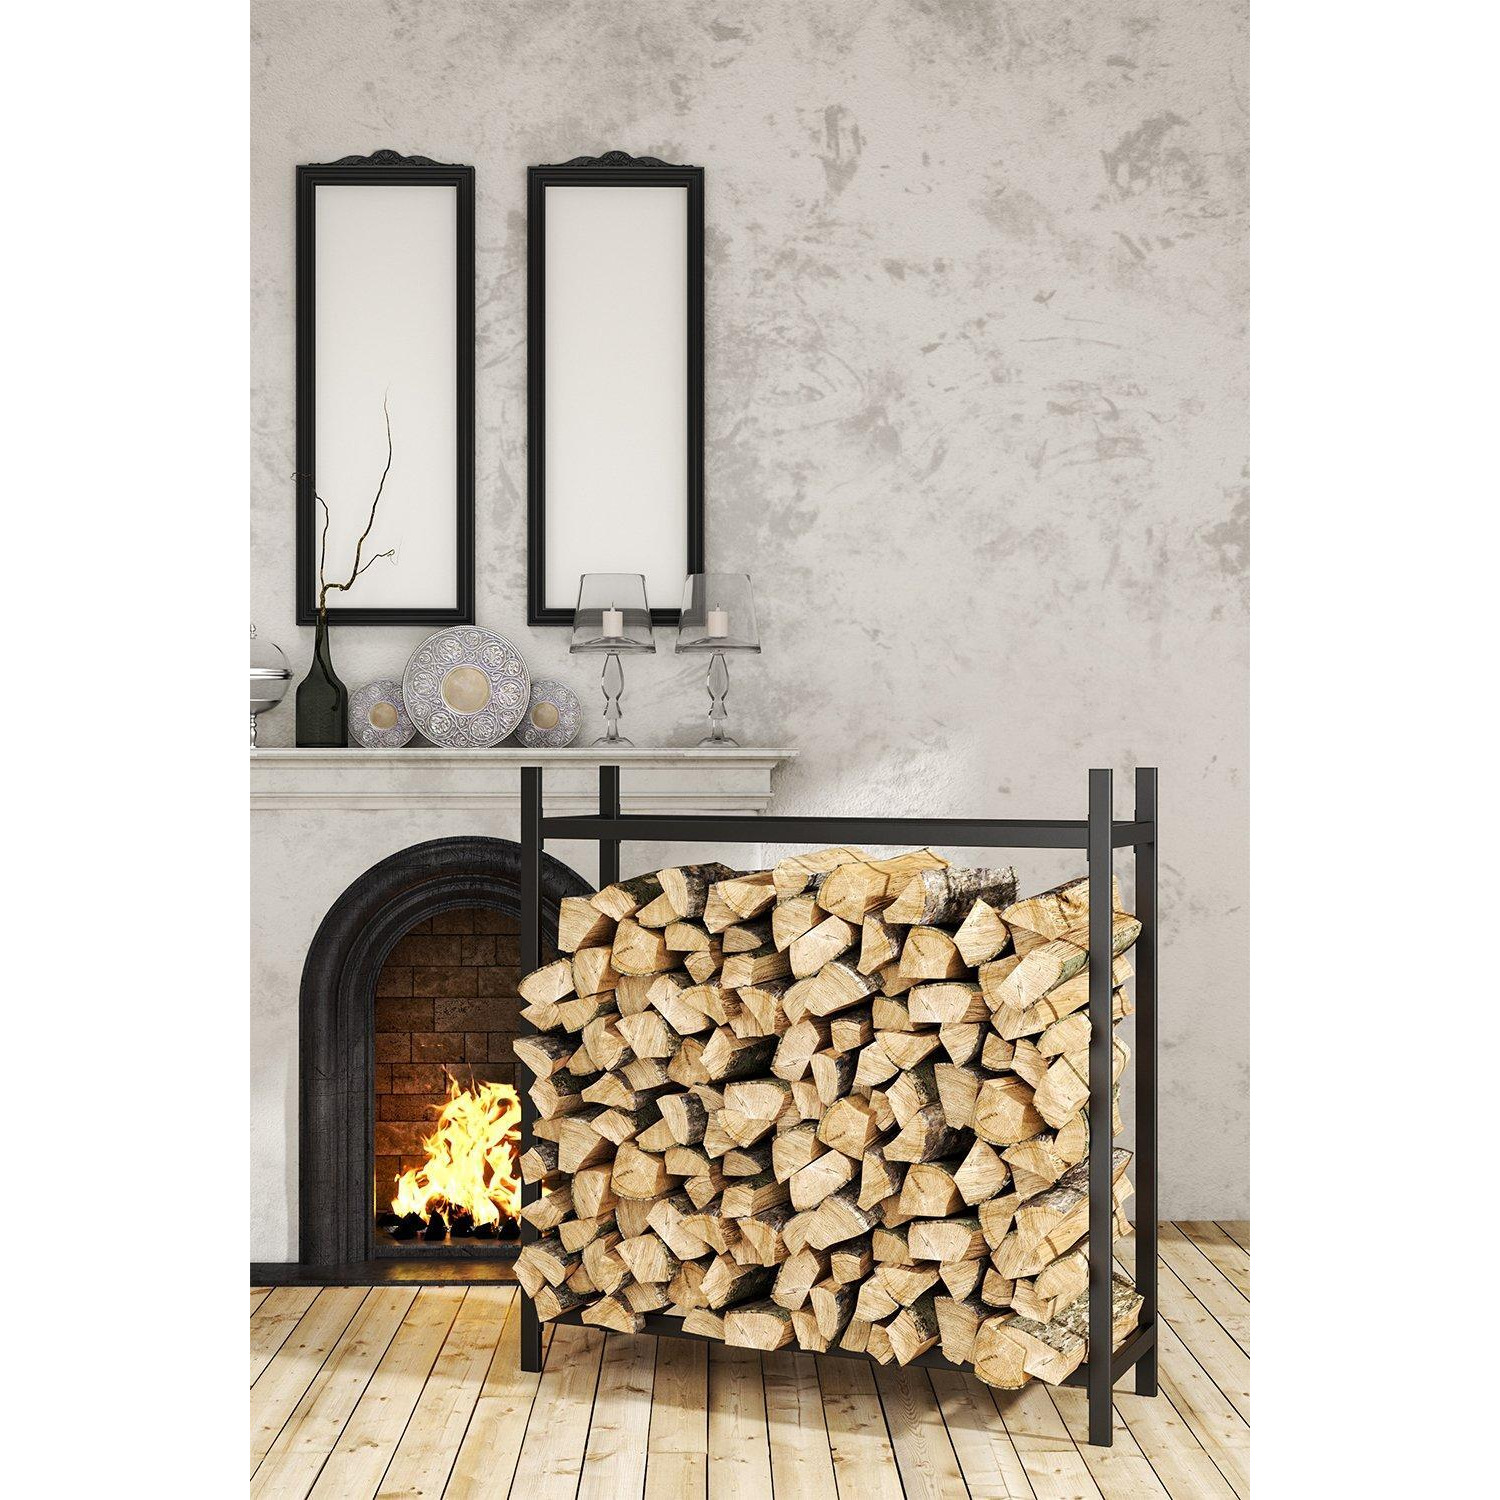 Metal Powder Coated Firewood Logs Holder - image 1